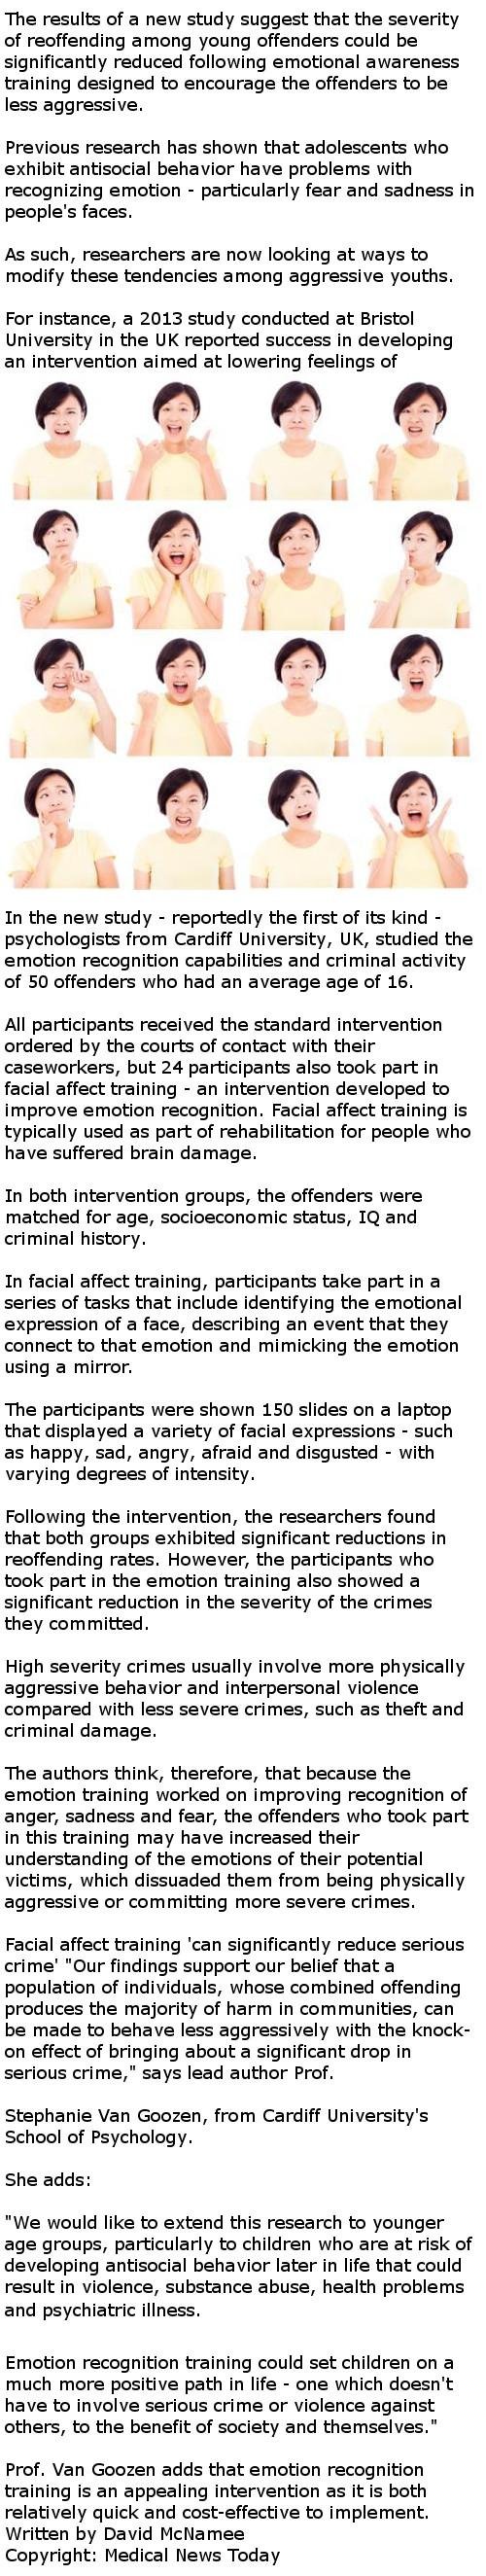 Emotional awareness training